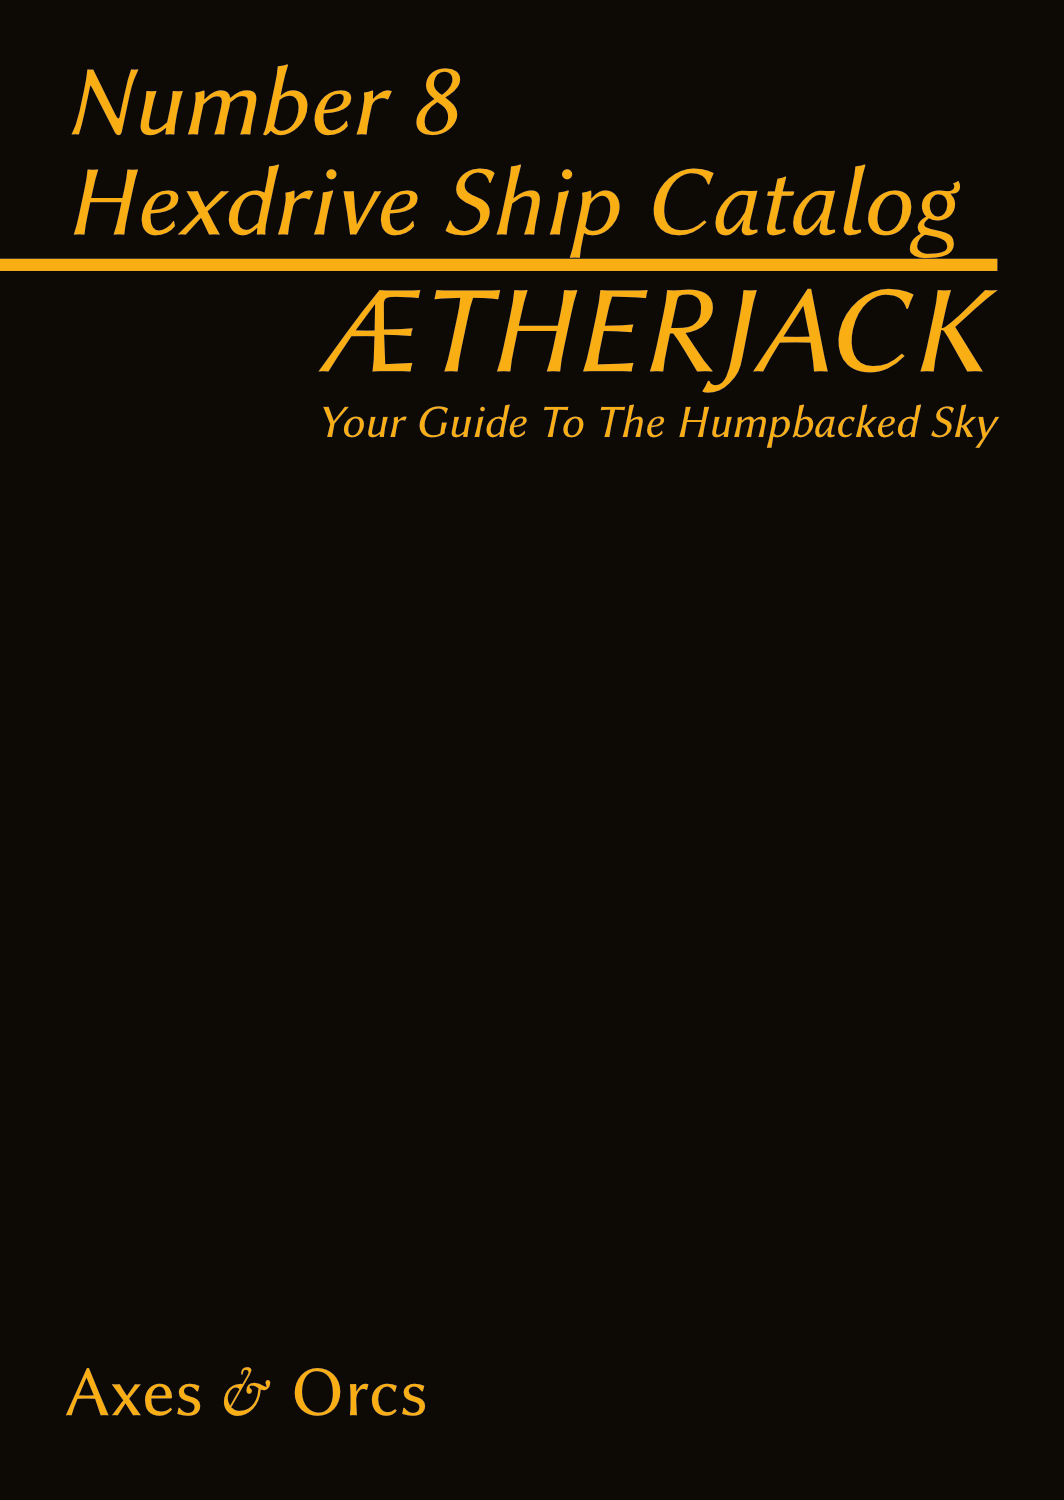 AEtherjack's Almanac Number 8 Hexdrive Ship Catalog - Exalted Funeral